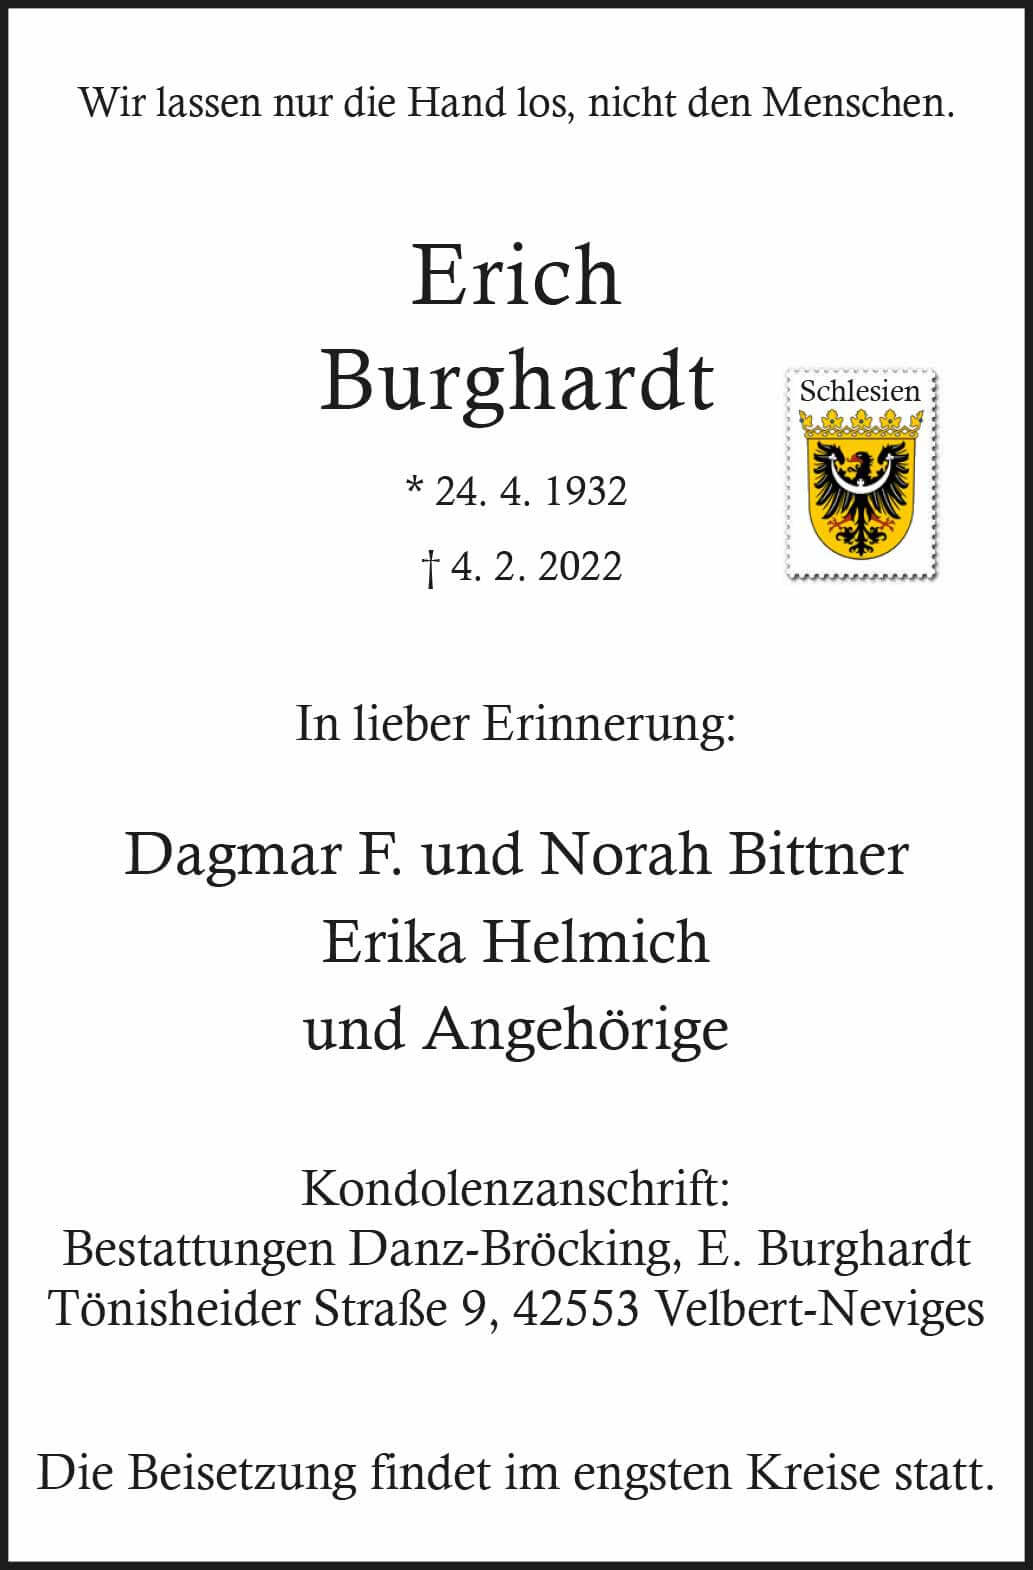 Erich Burghardt † 4. 2. 2022